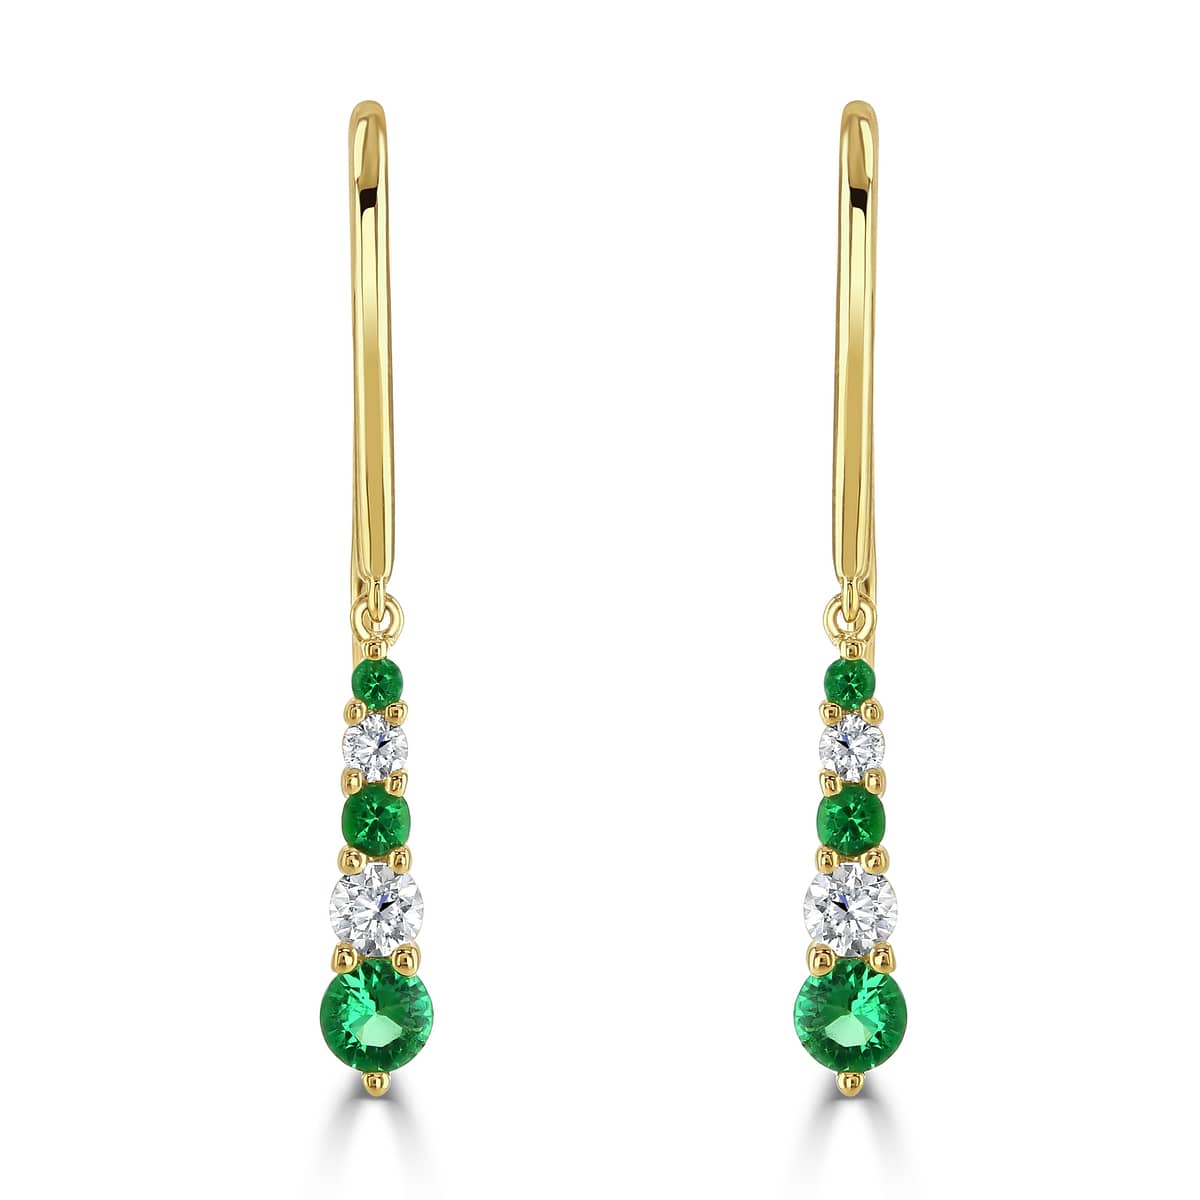 Weir Collecion 18k yellow gold diamond and emerald tiara drop earrings